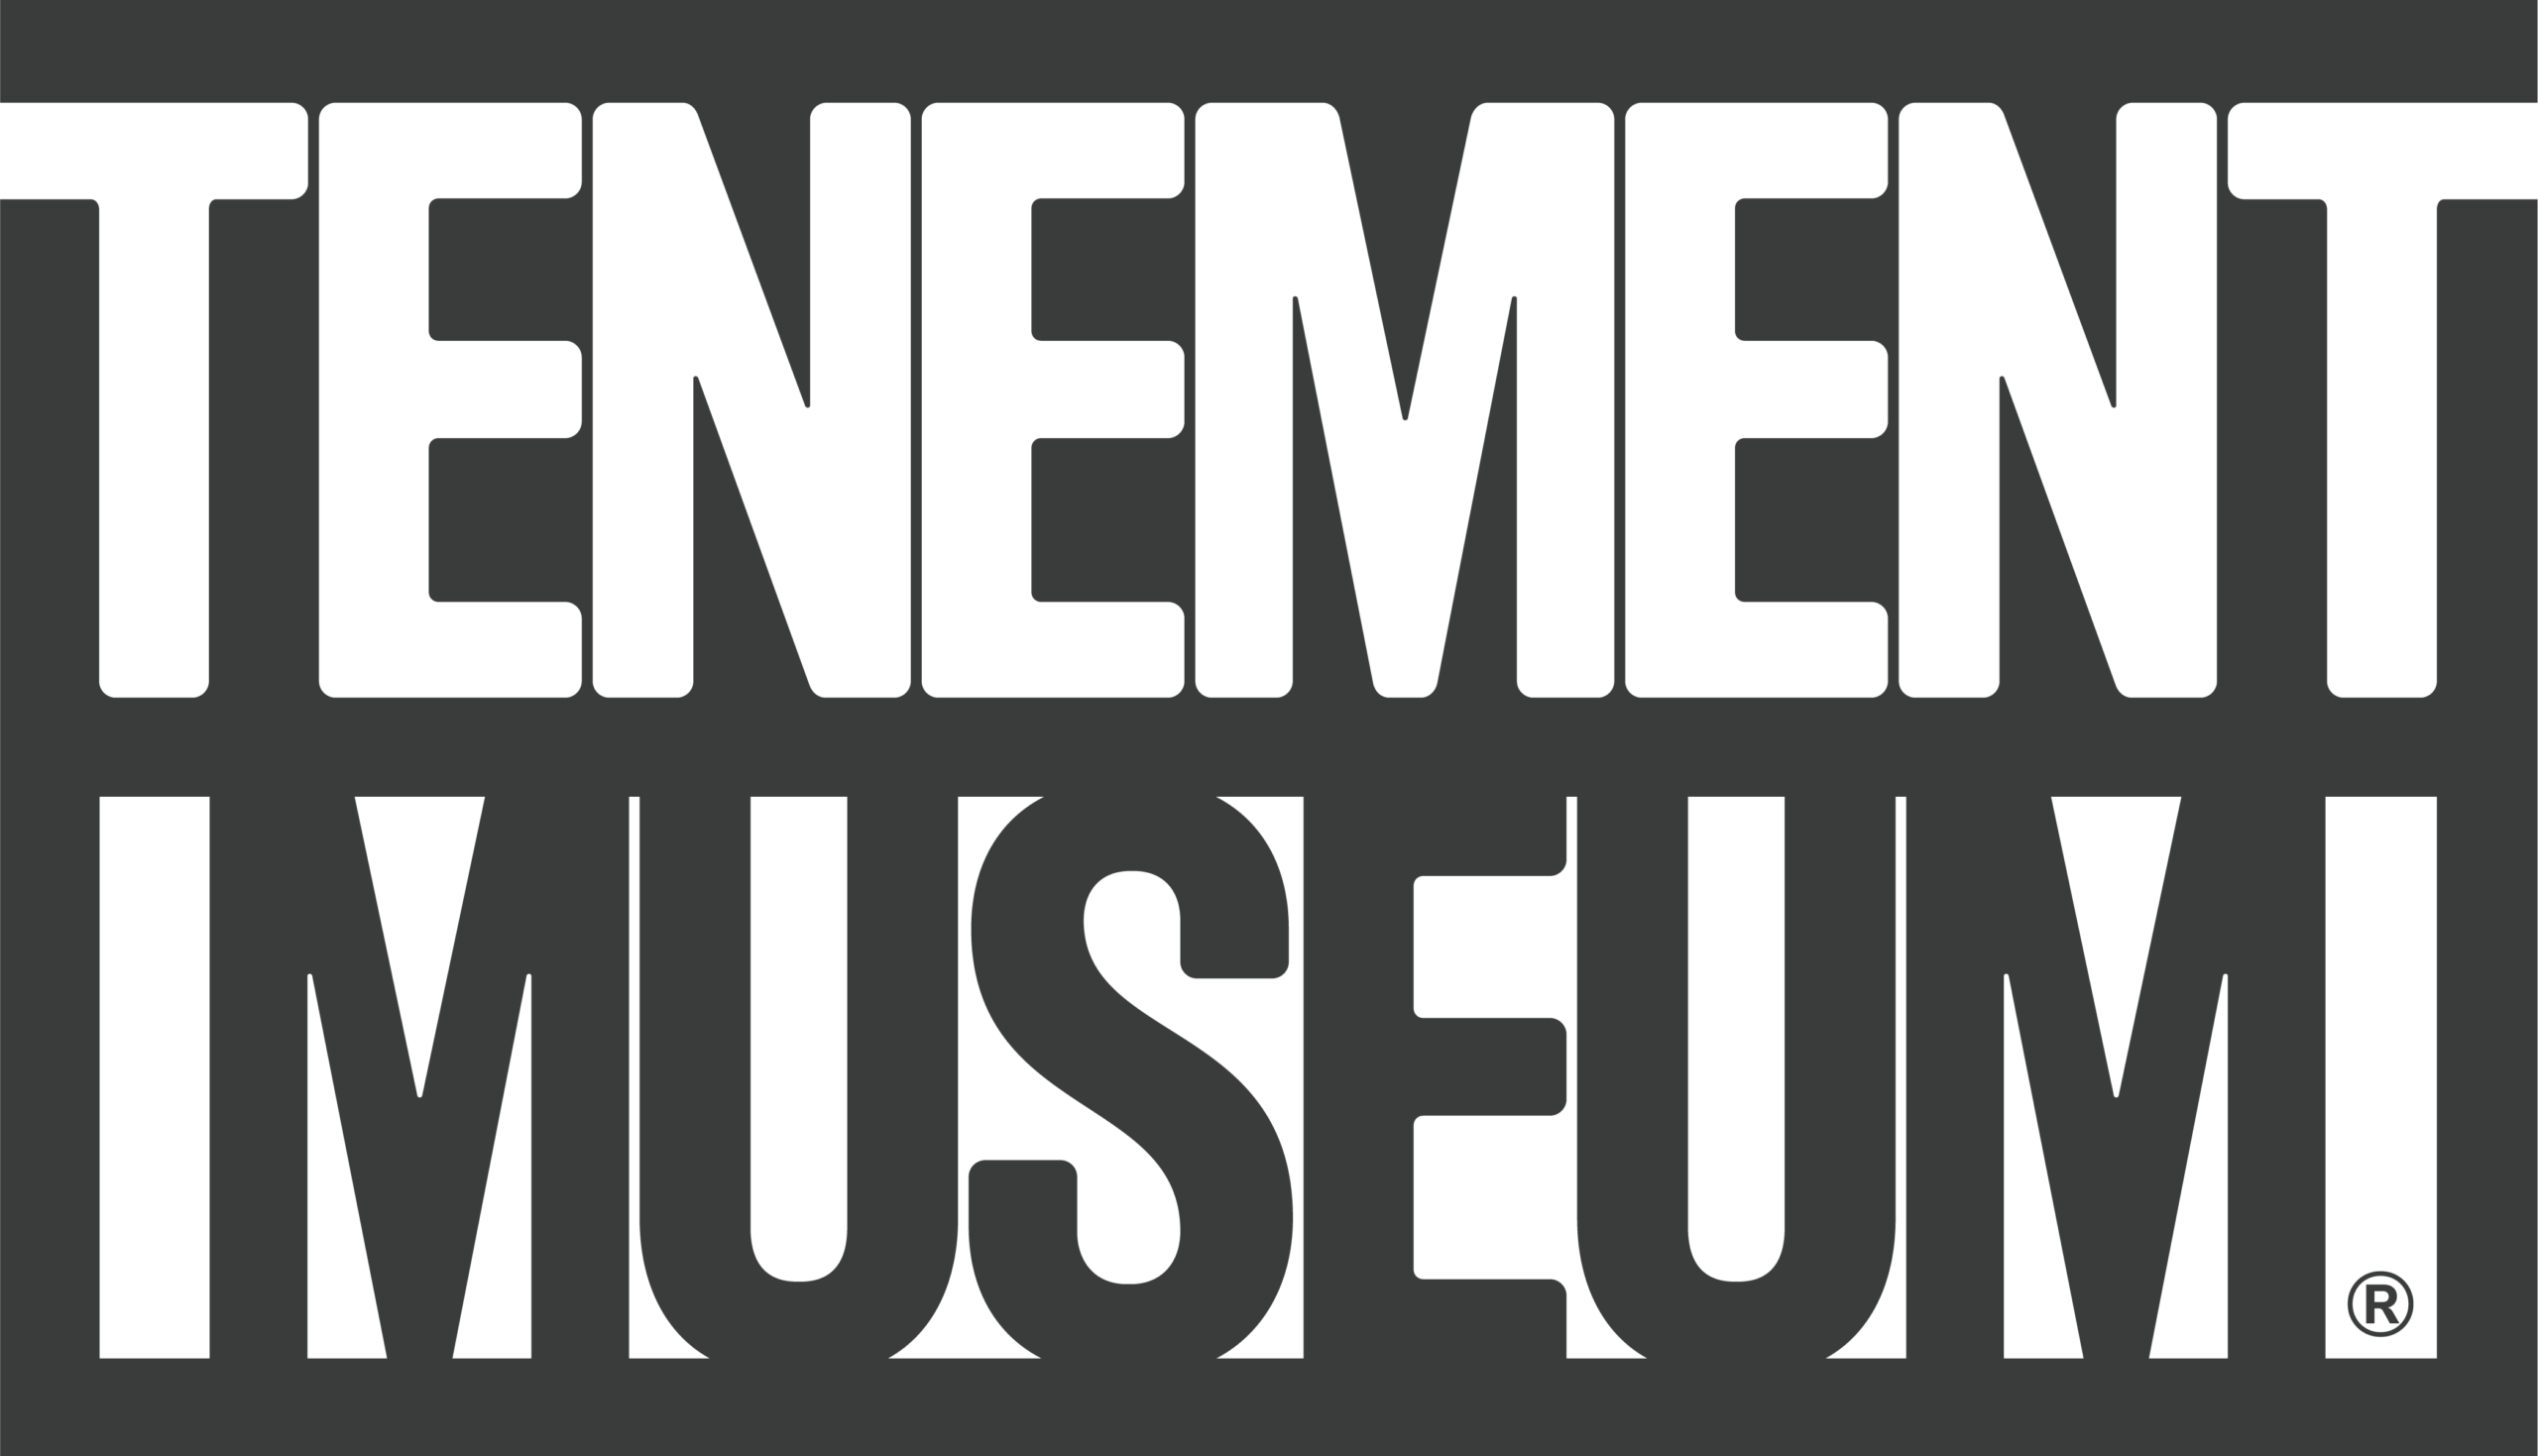 Tenement Museum logo